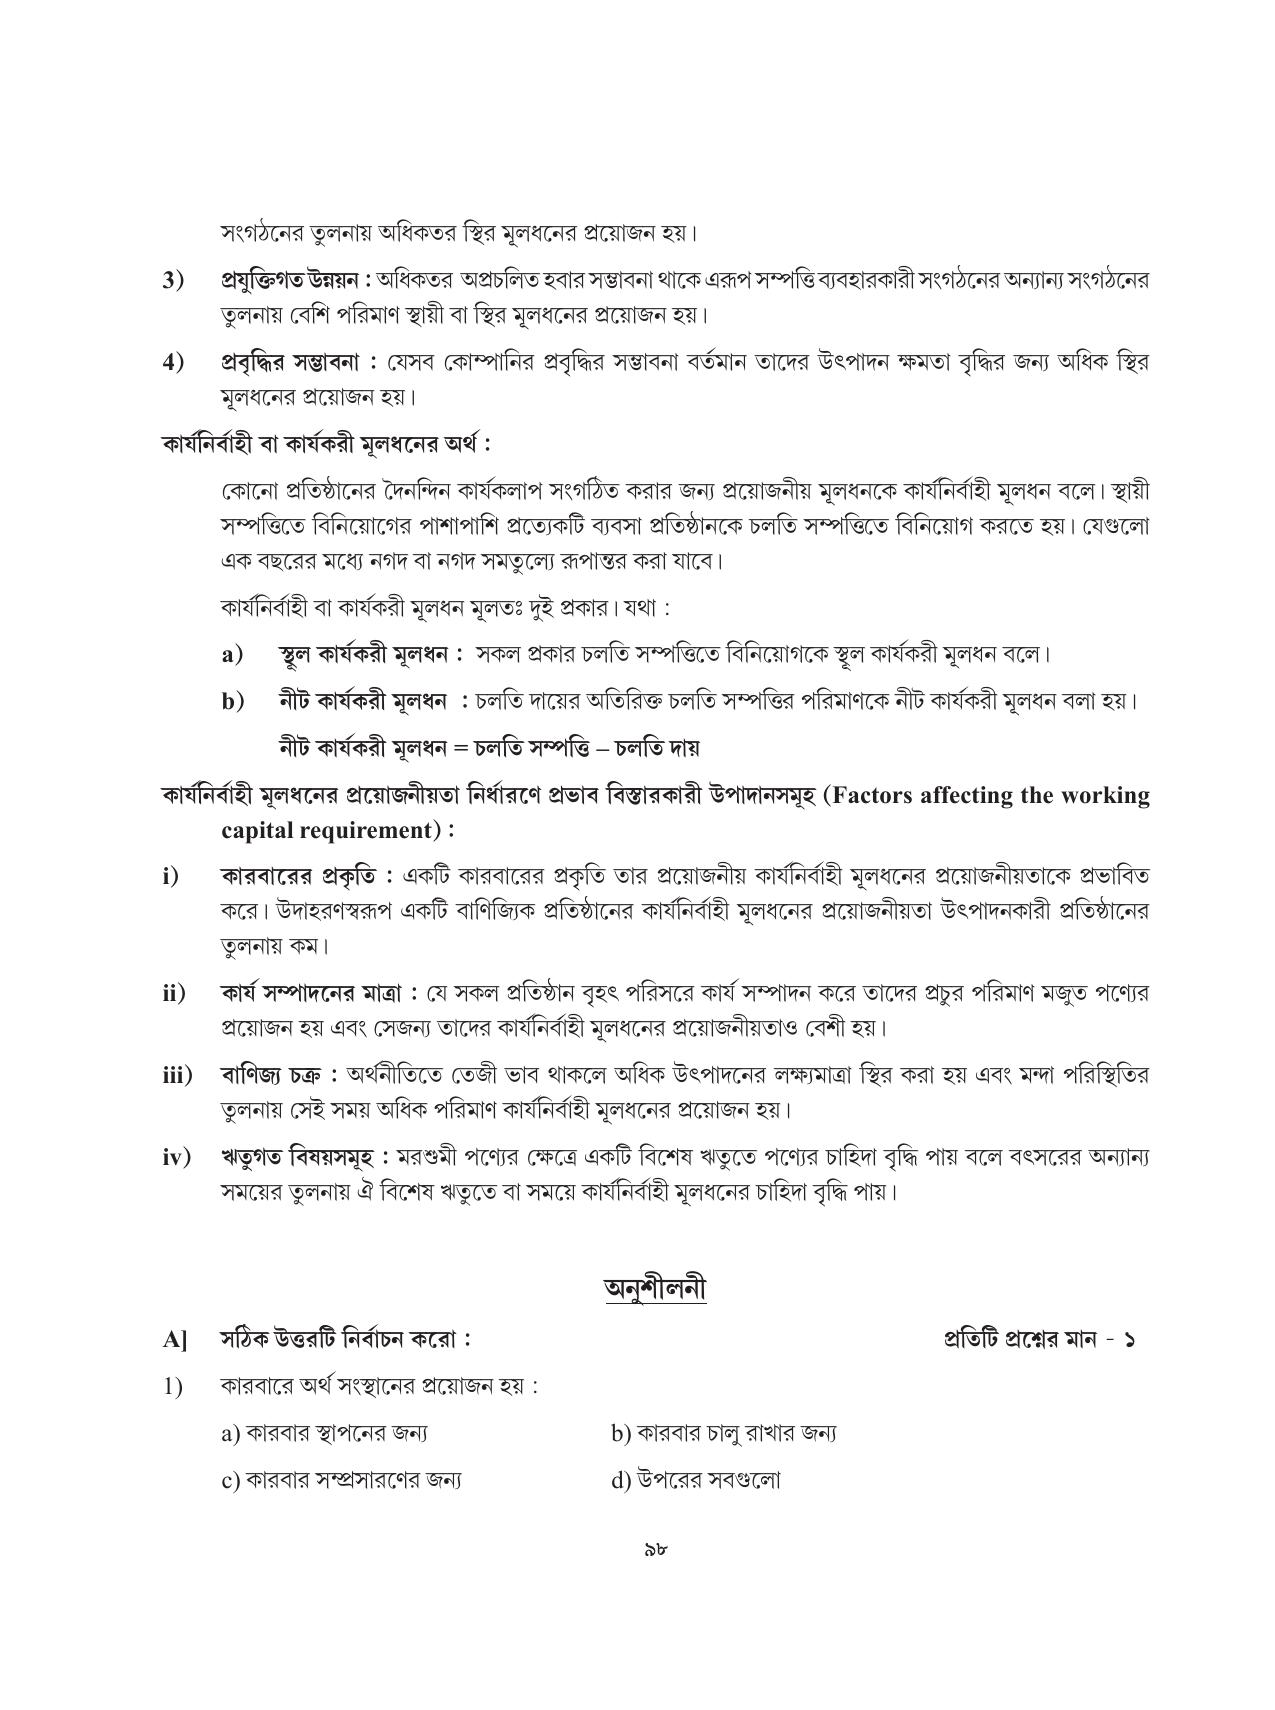 Tripura Board Class 12 Karbari Shastra Bengali Version Workbooks - Page 98